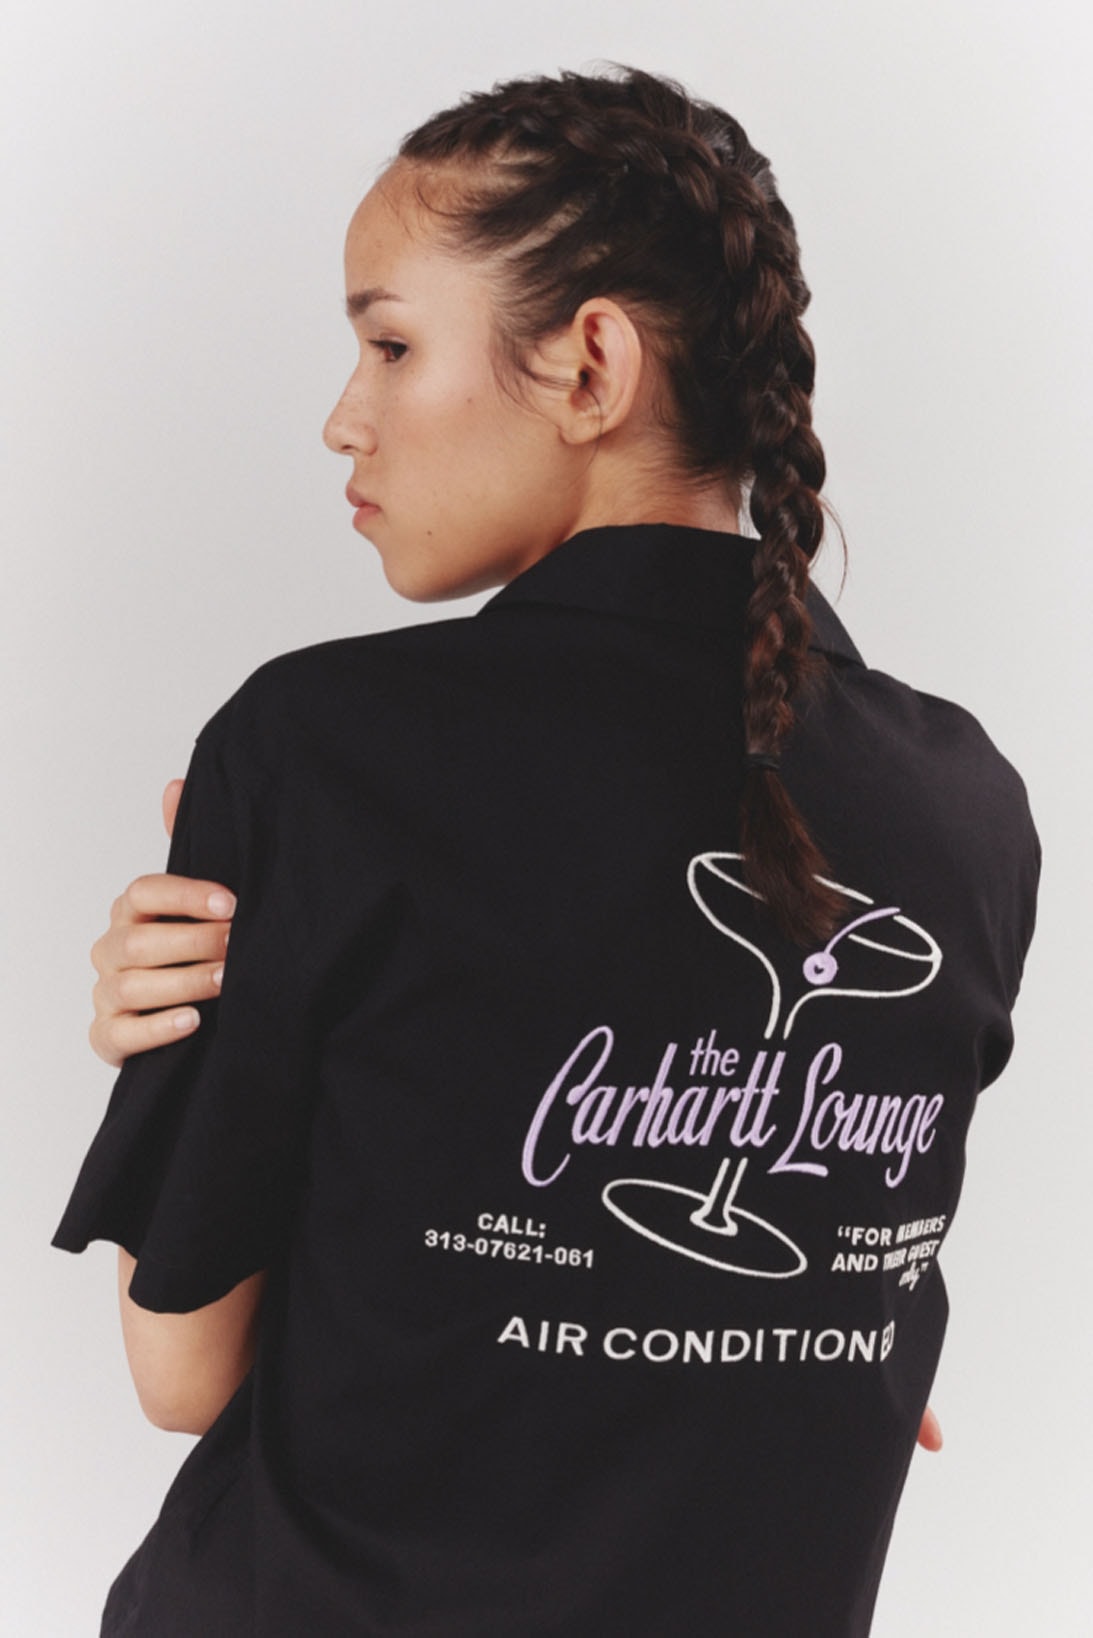 Carhartt WIP Spring Summer Women's Collection Denim Jackets Hoodies Accessories